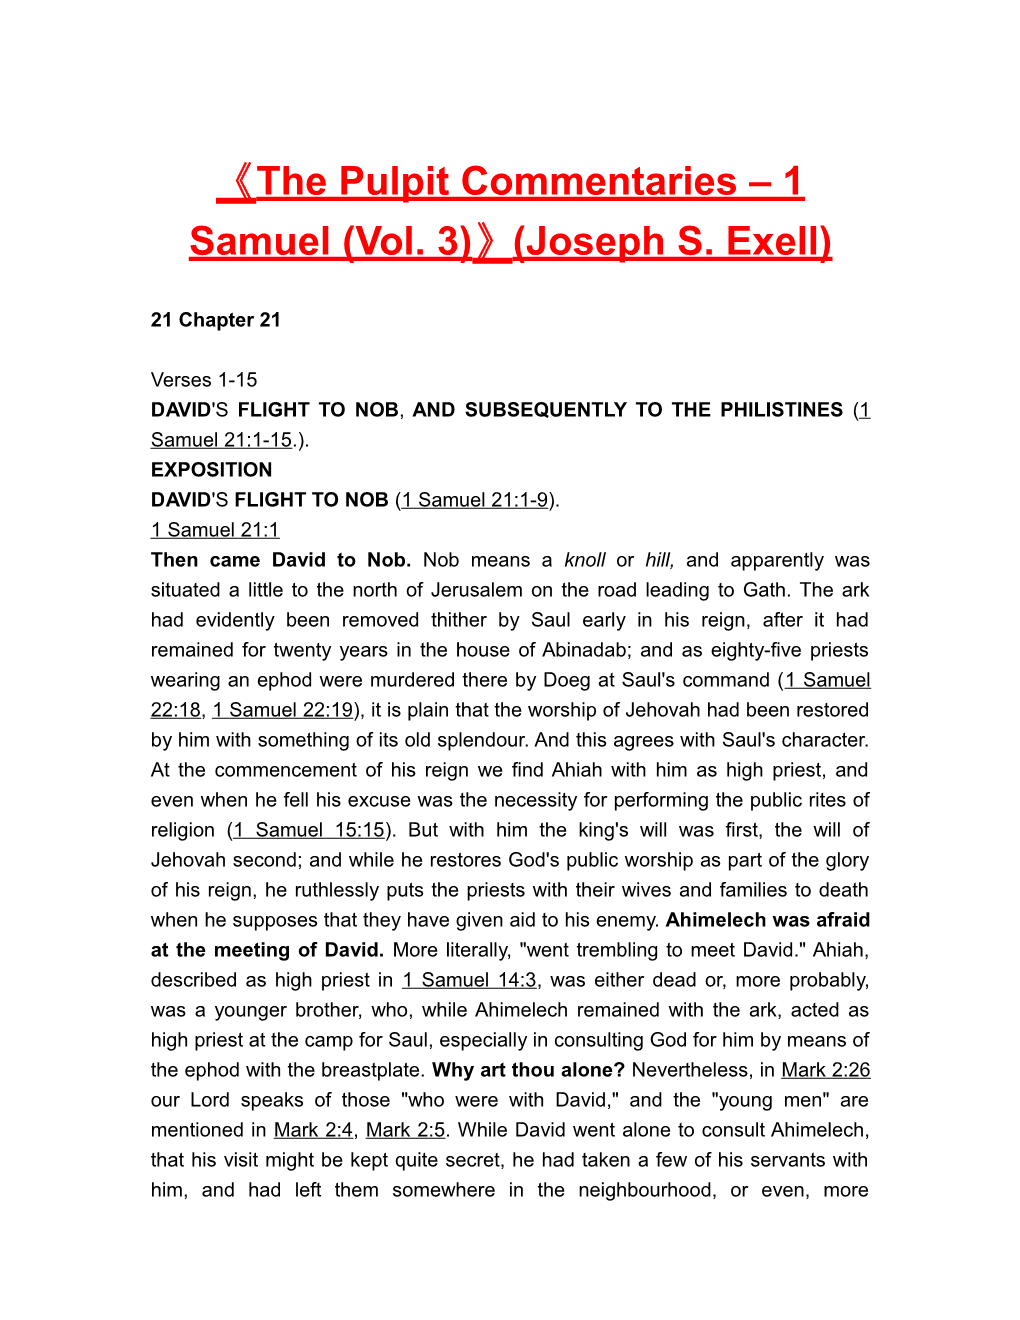 The Pulpit Commentaries 1 Samuel (Vol. 3) (Joseph S. Exell)